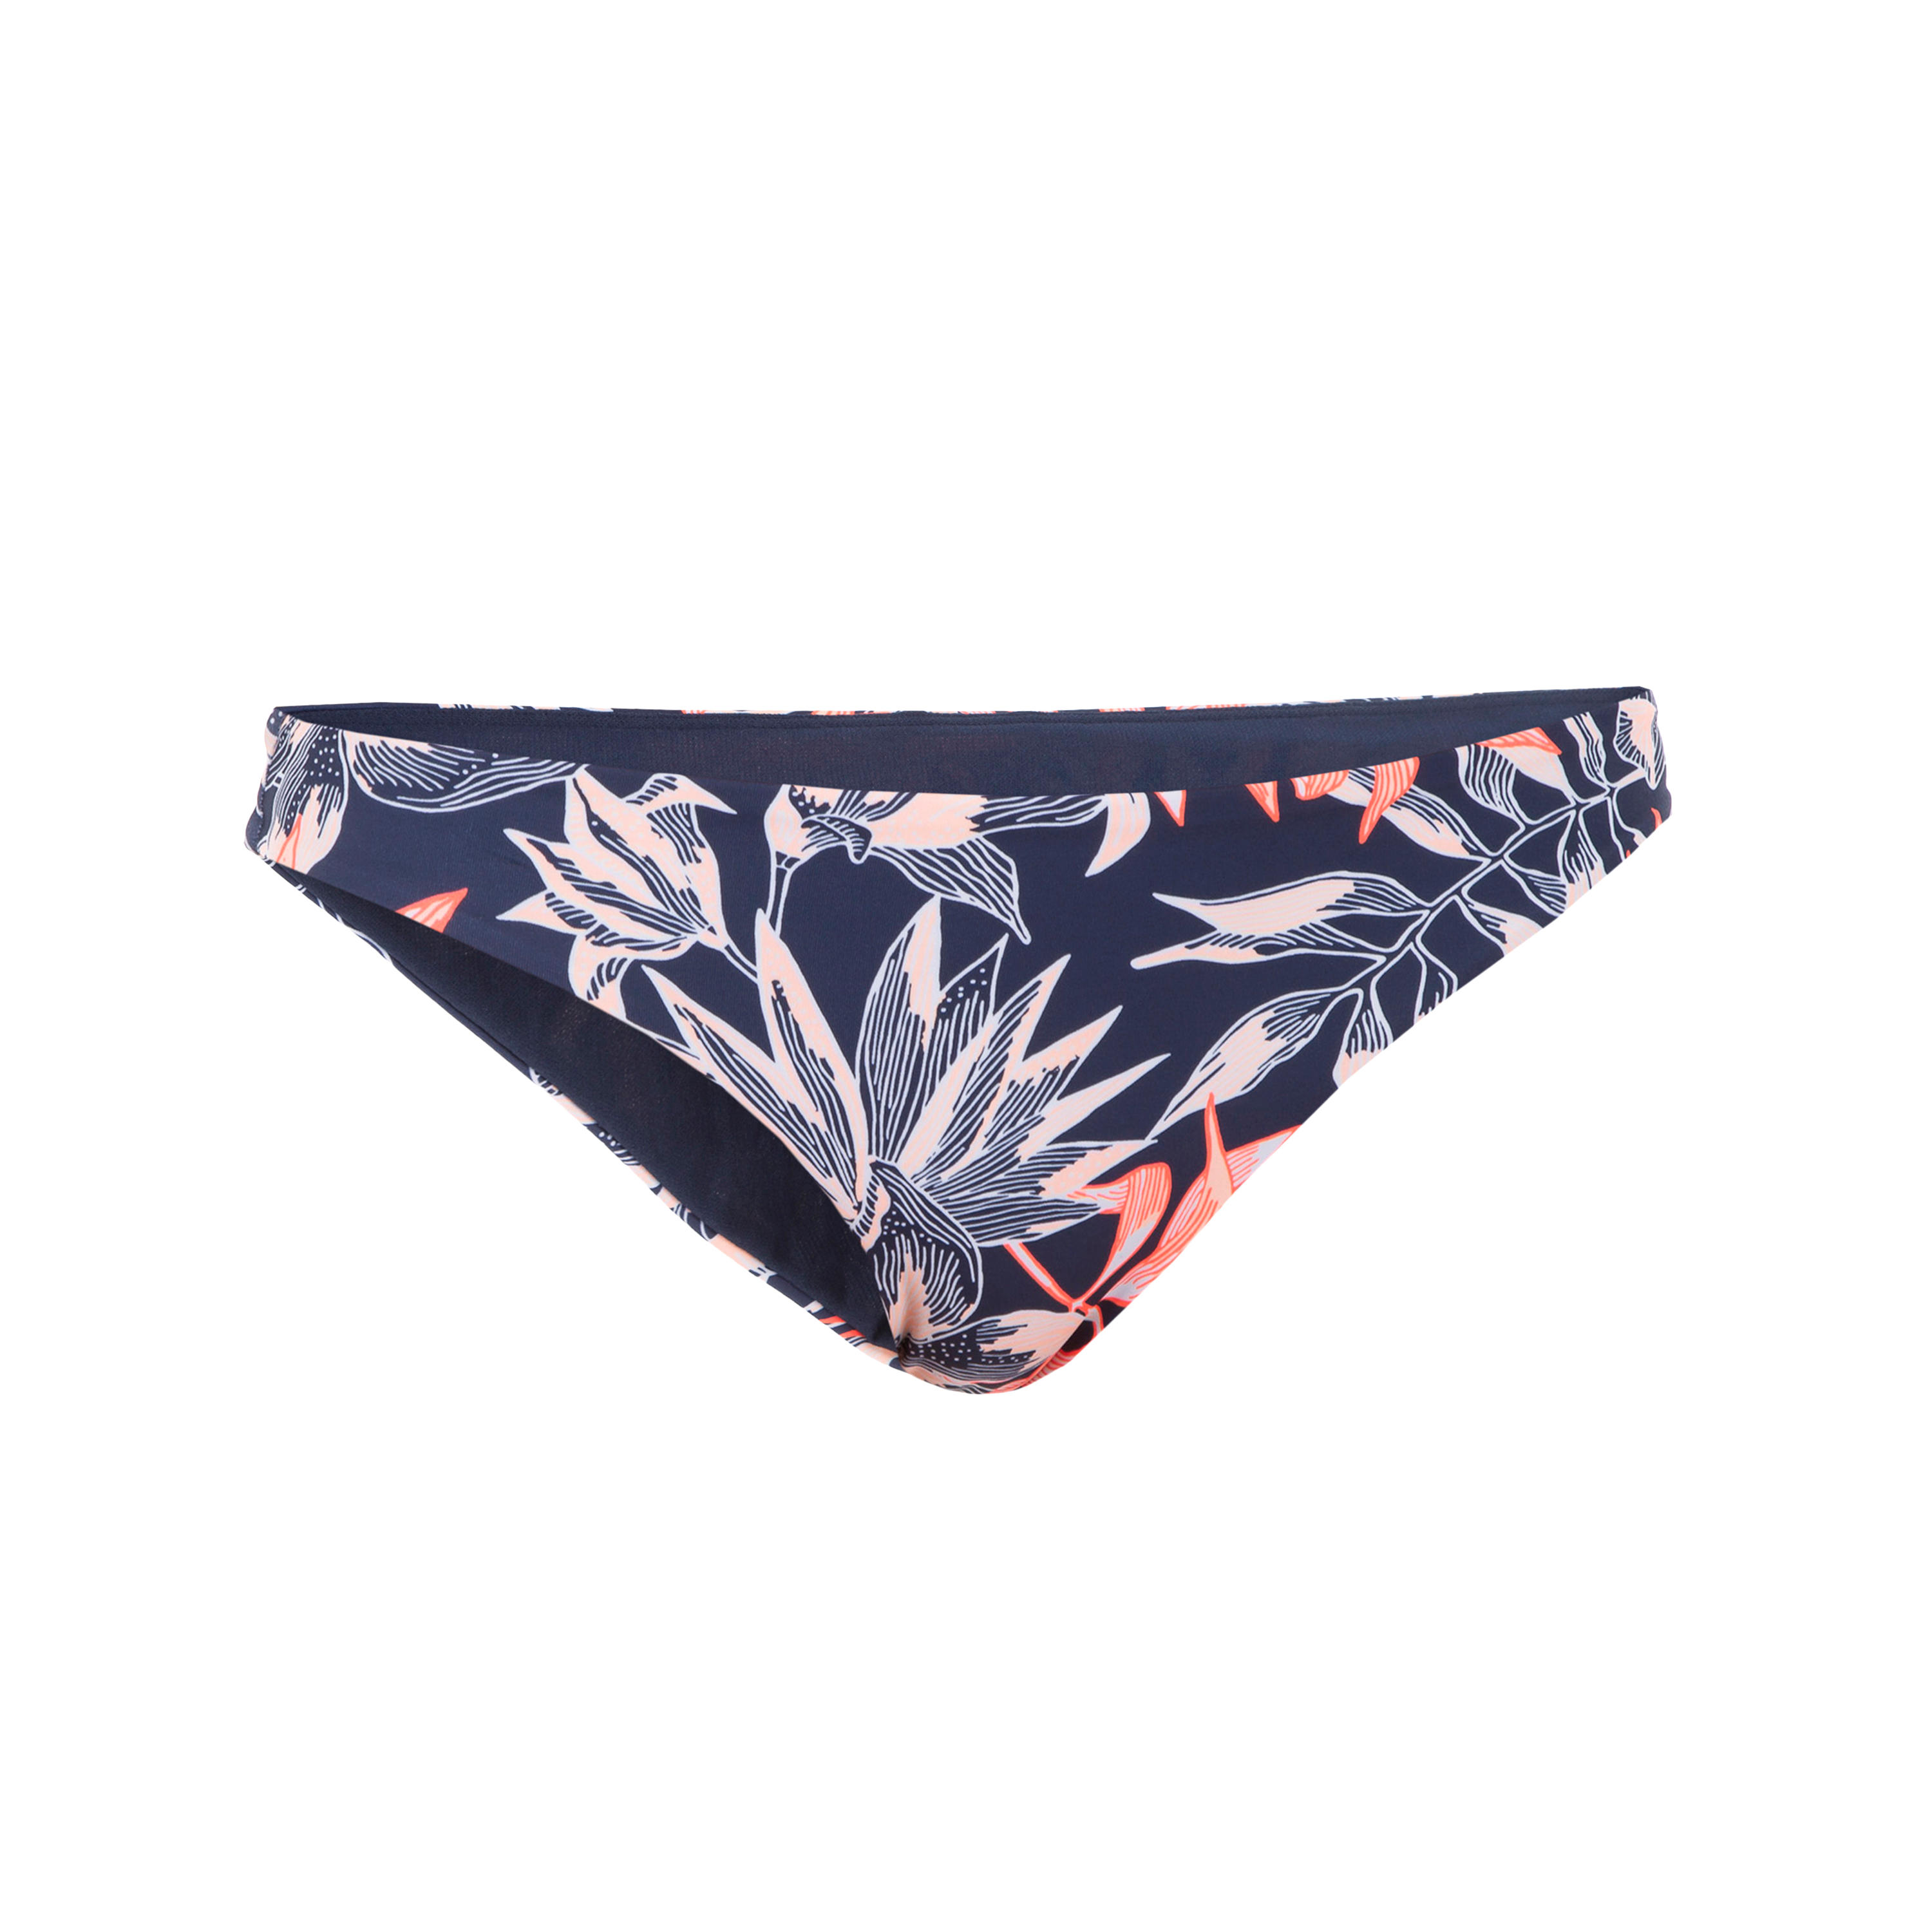 Women's briefs swimsuit bottoms VIVIAN Roxy 1/7